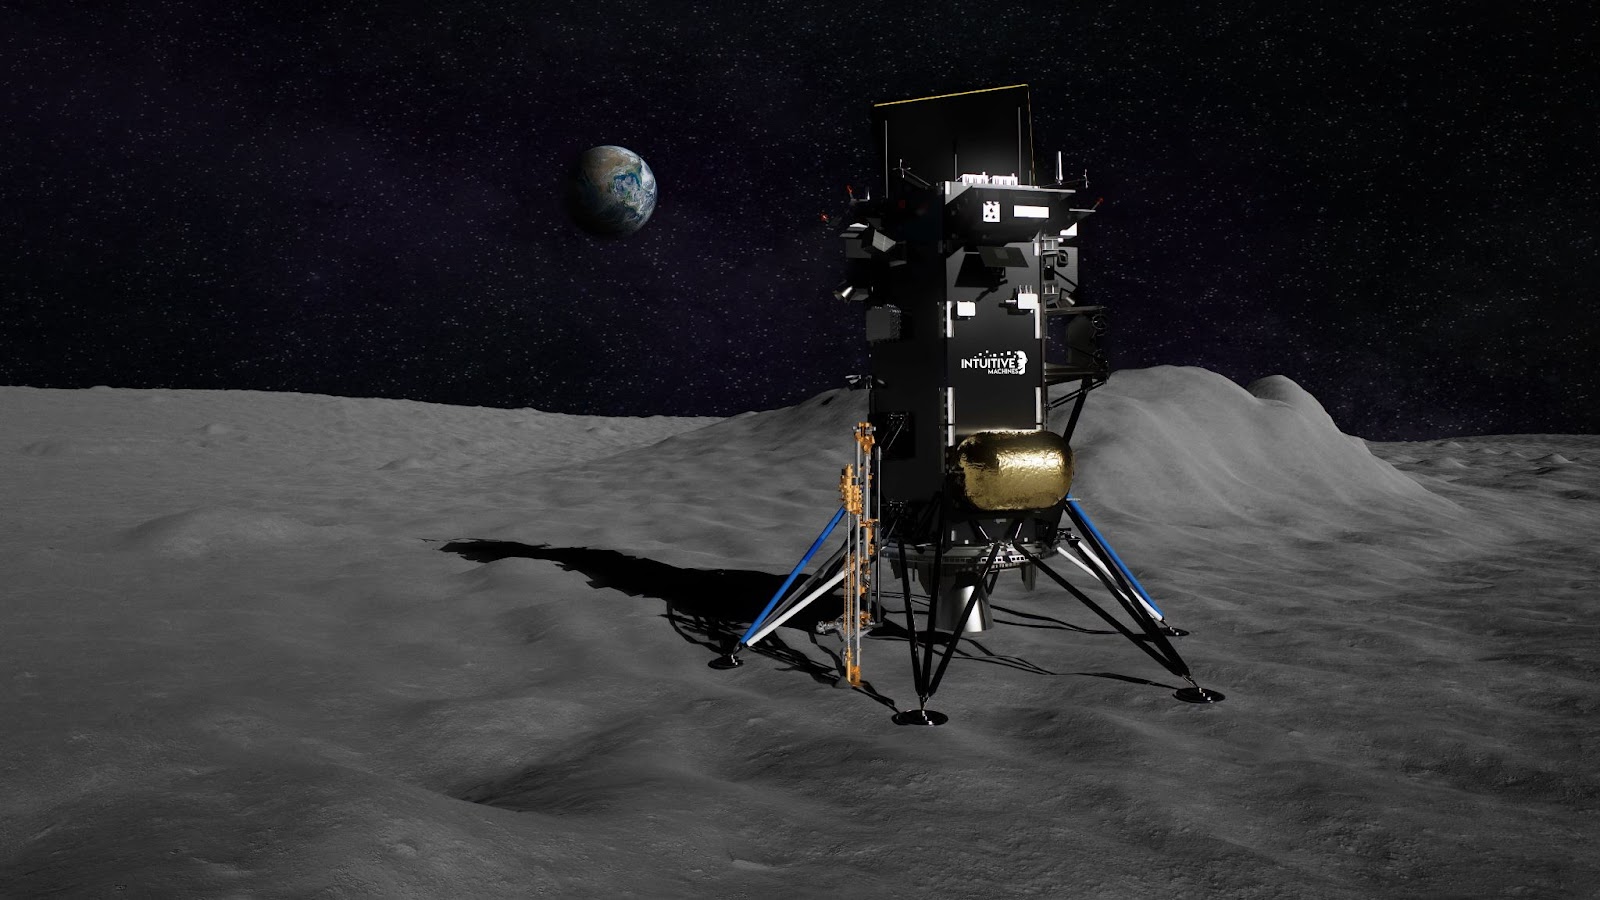 An illustration of Intuitive Machines’ Nova-C lander on the moon